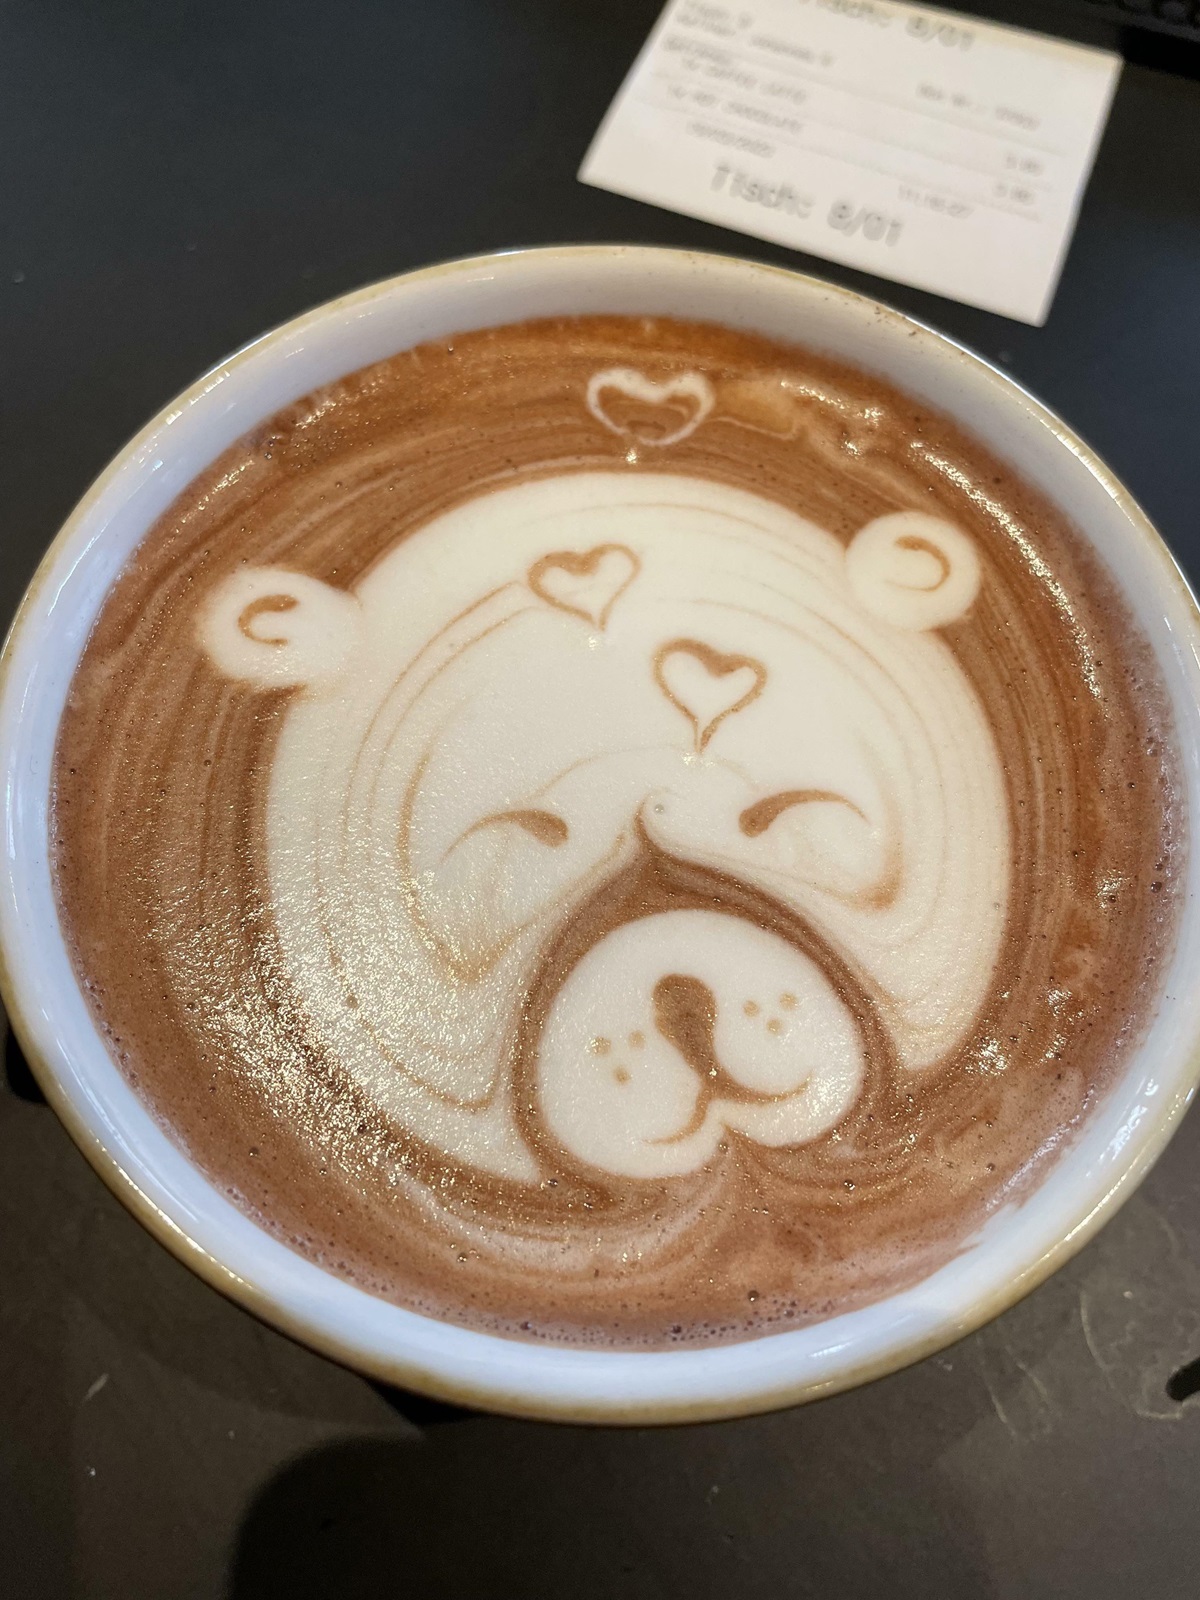 My Latte Art Bear - Oddly Satisfying Food Pics